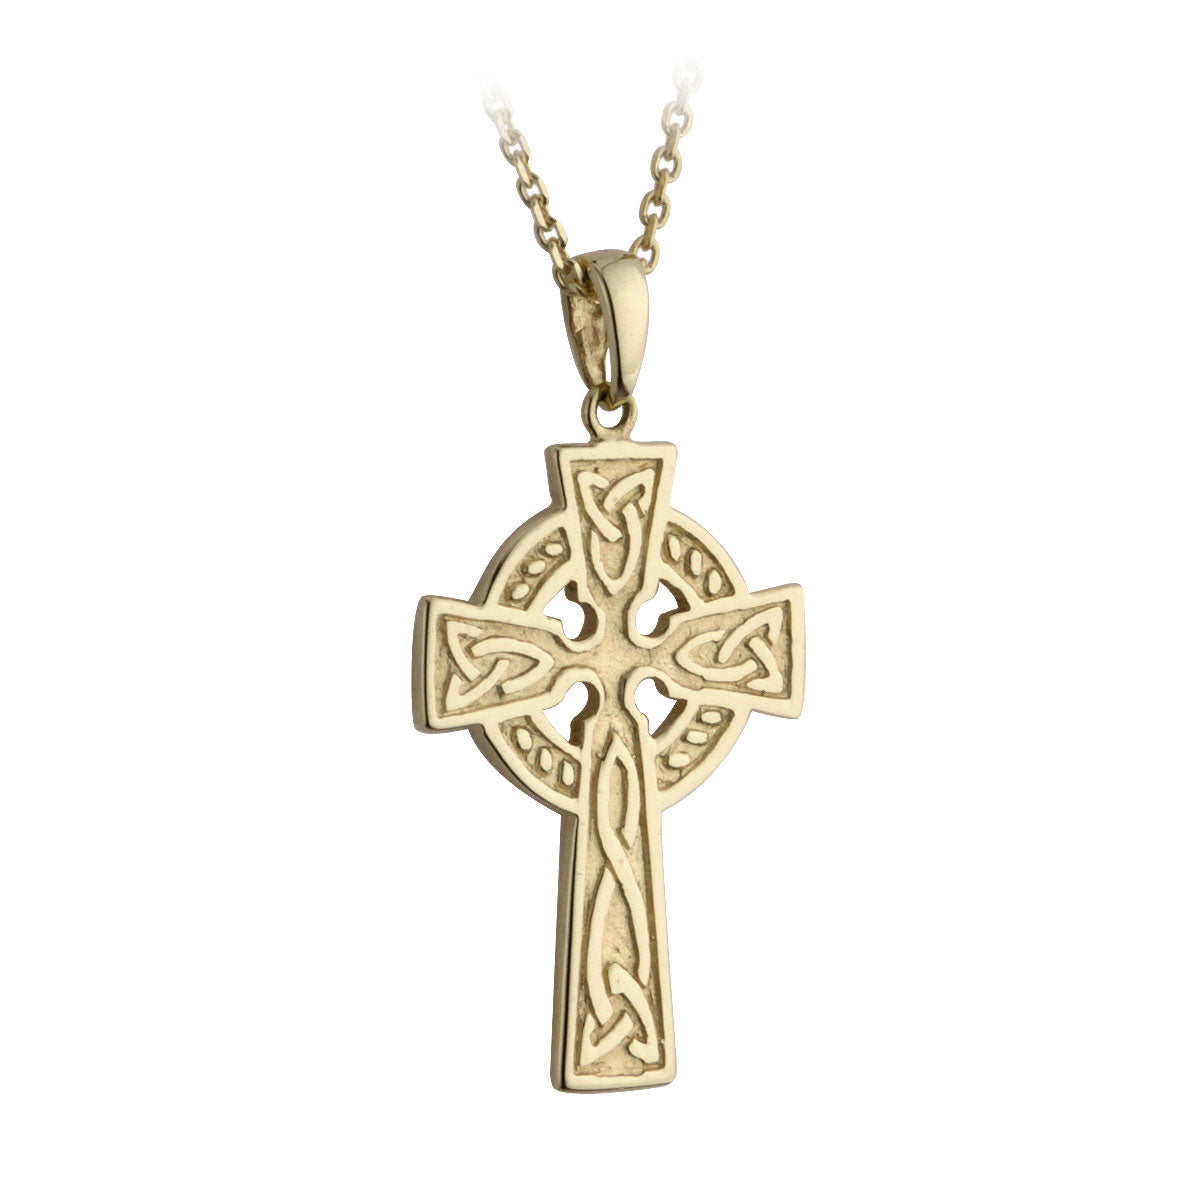 10k gold small double sided celtic cross pendant s44648 from Solvar